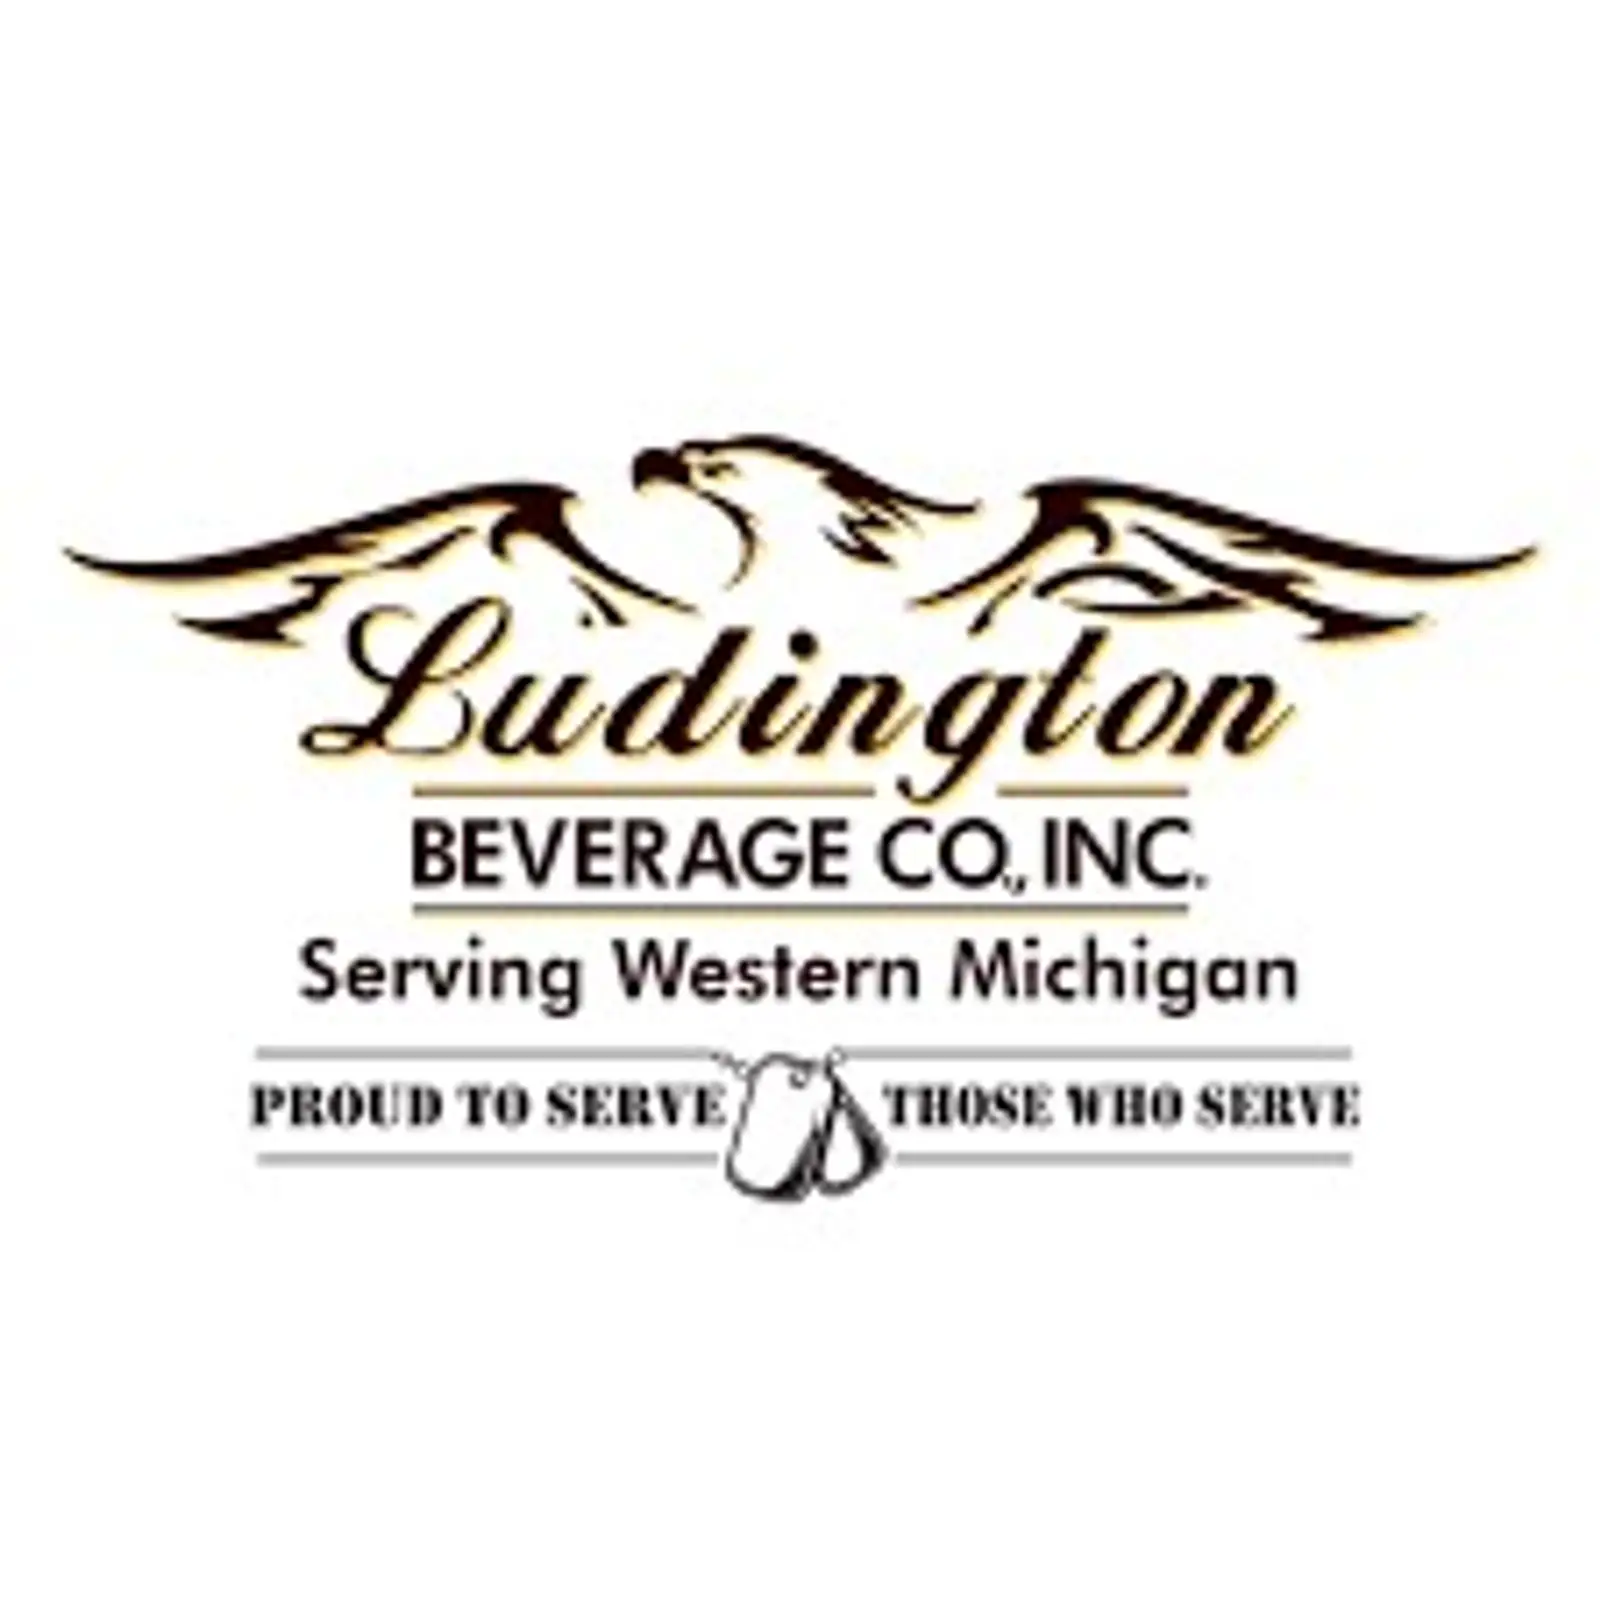 Ludington Beverage Co. logo